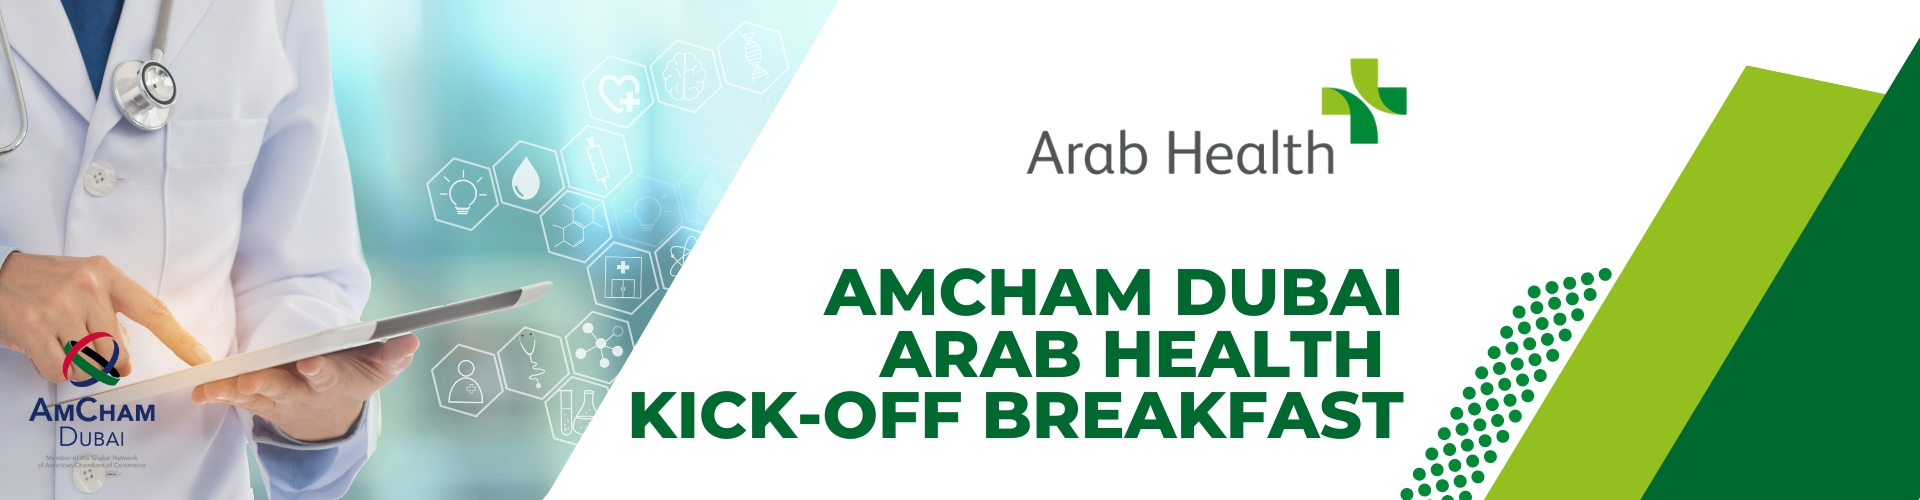 thumbnails AmCham Dubai Arab Health Kick Off Breakfast